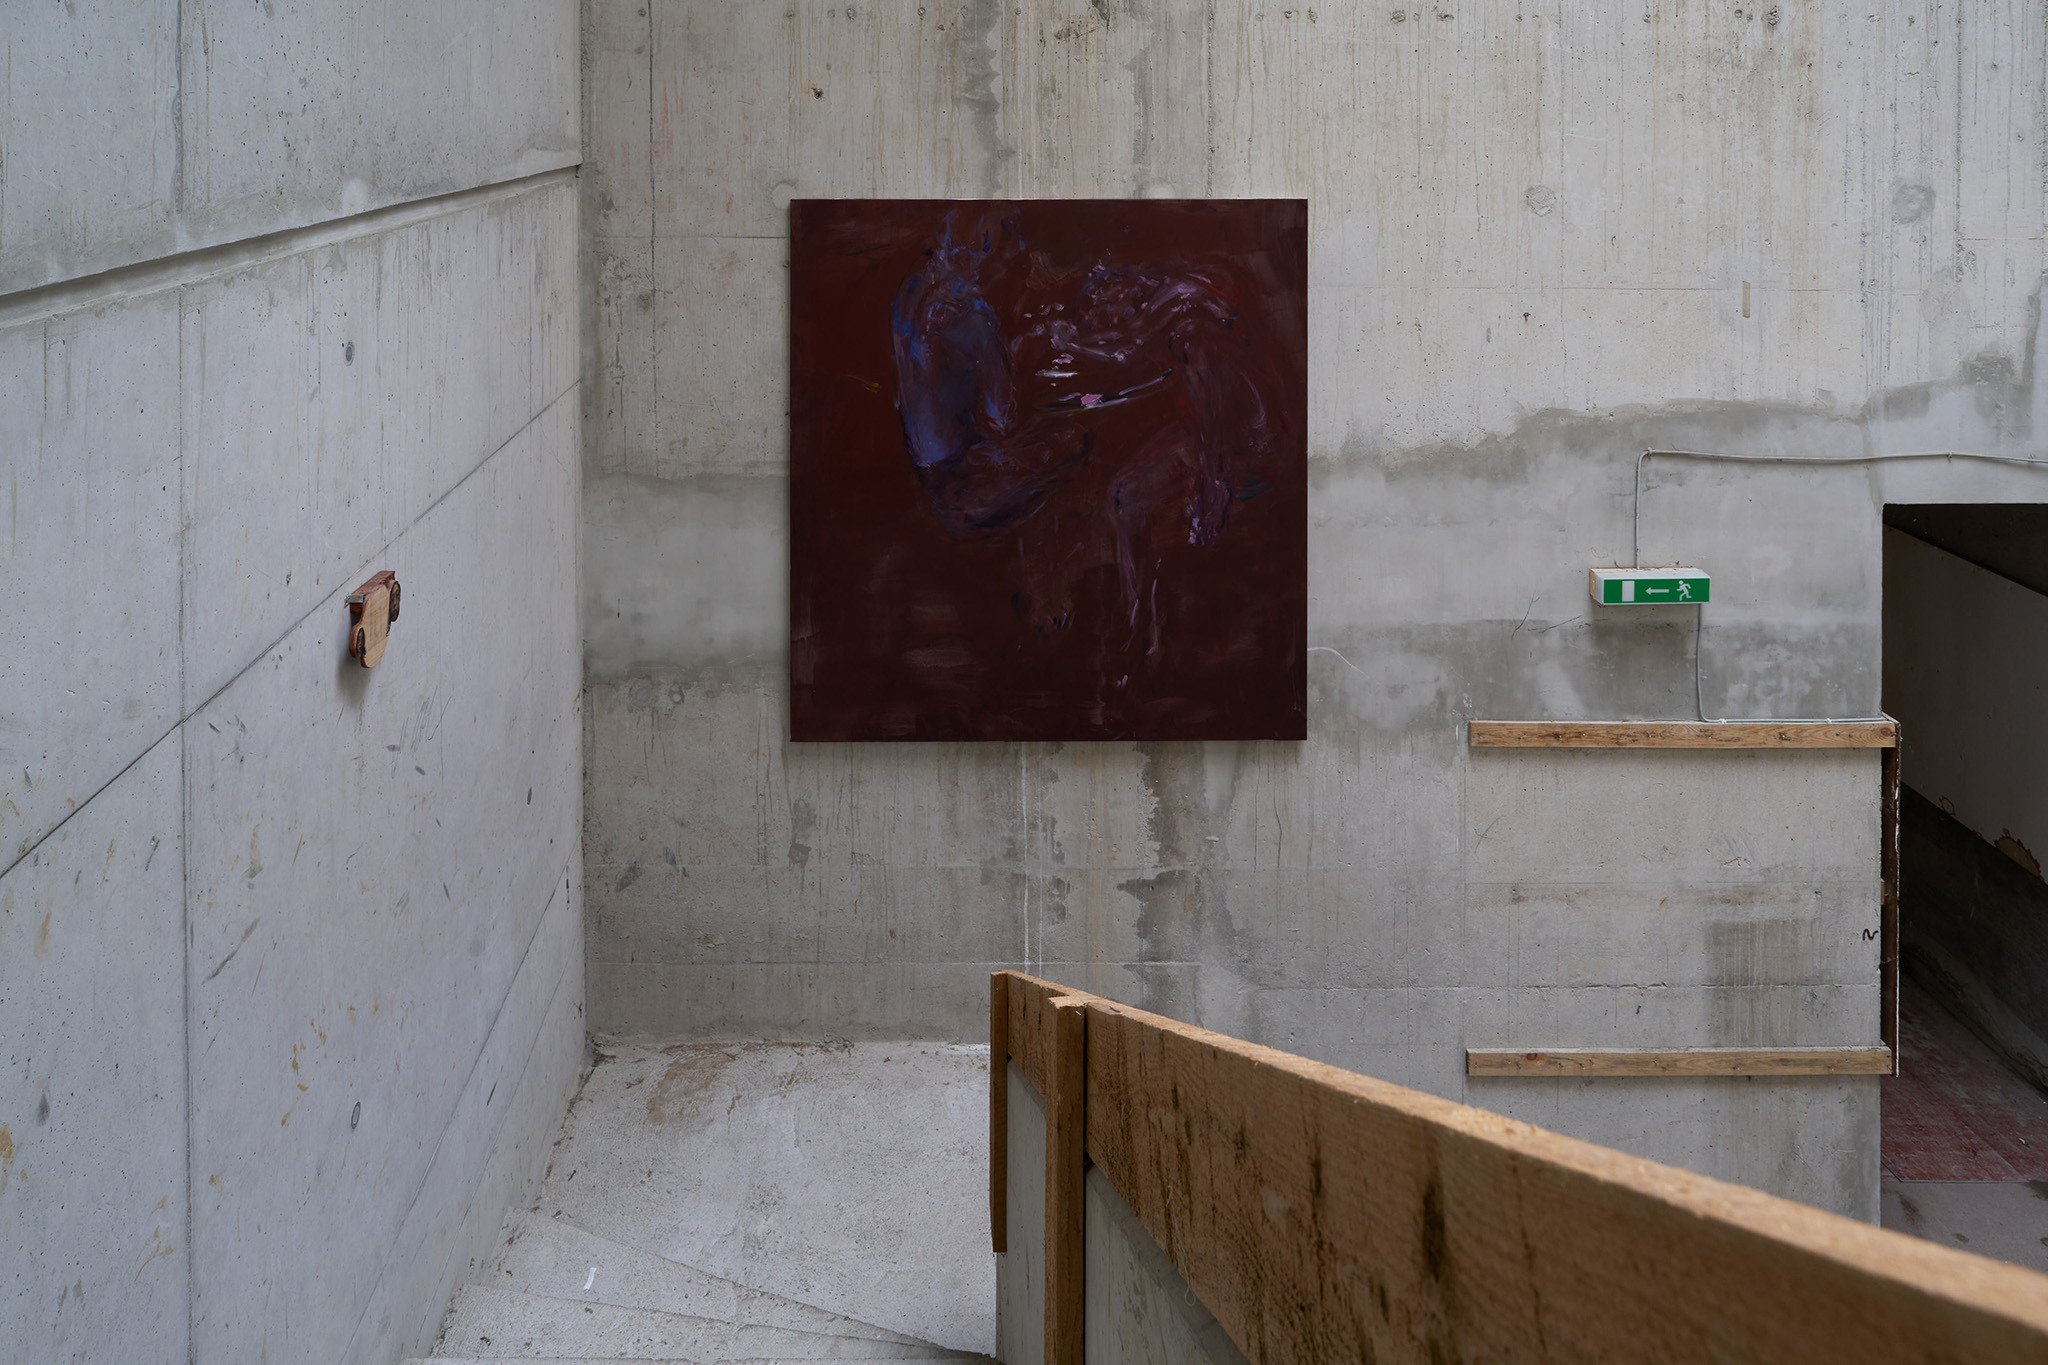 Johanna Ehmke, talkin love / In der Bar, 180 x 170 cm, 2023; Left Wall: Swan Lee, Interior monologue of the sims, 2021